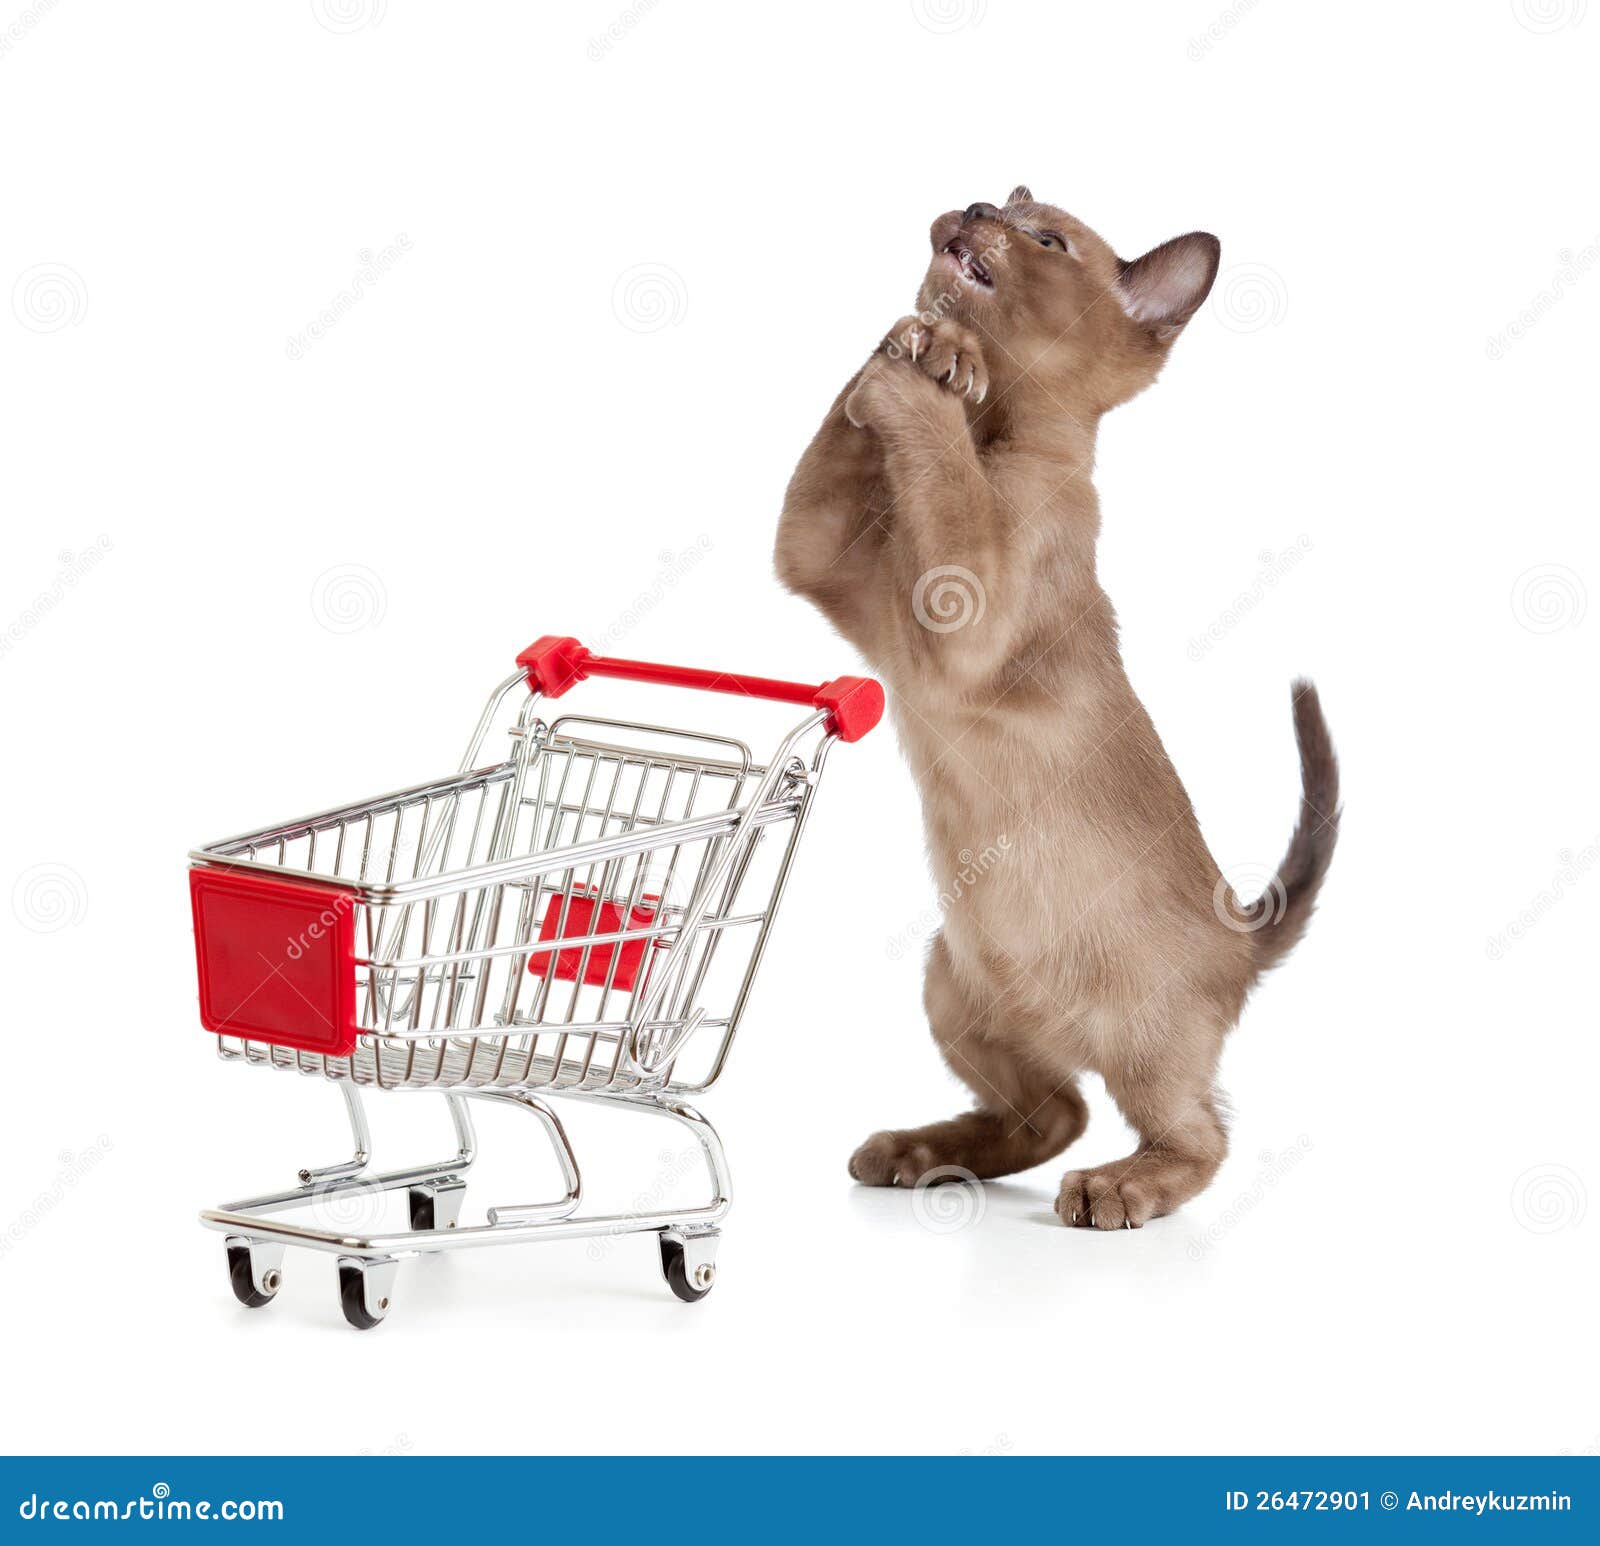 admiring kitten or cat with shopping cart